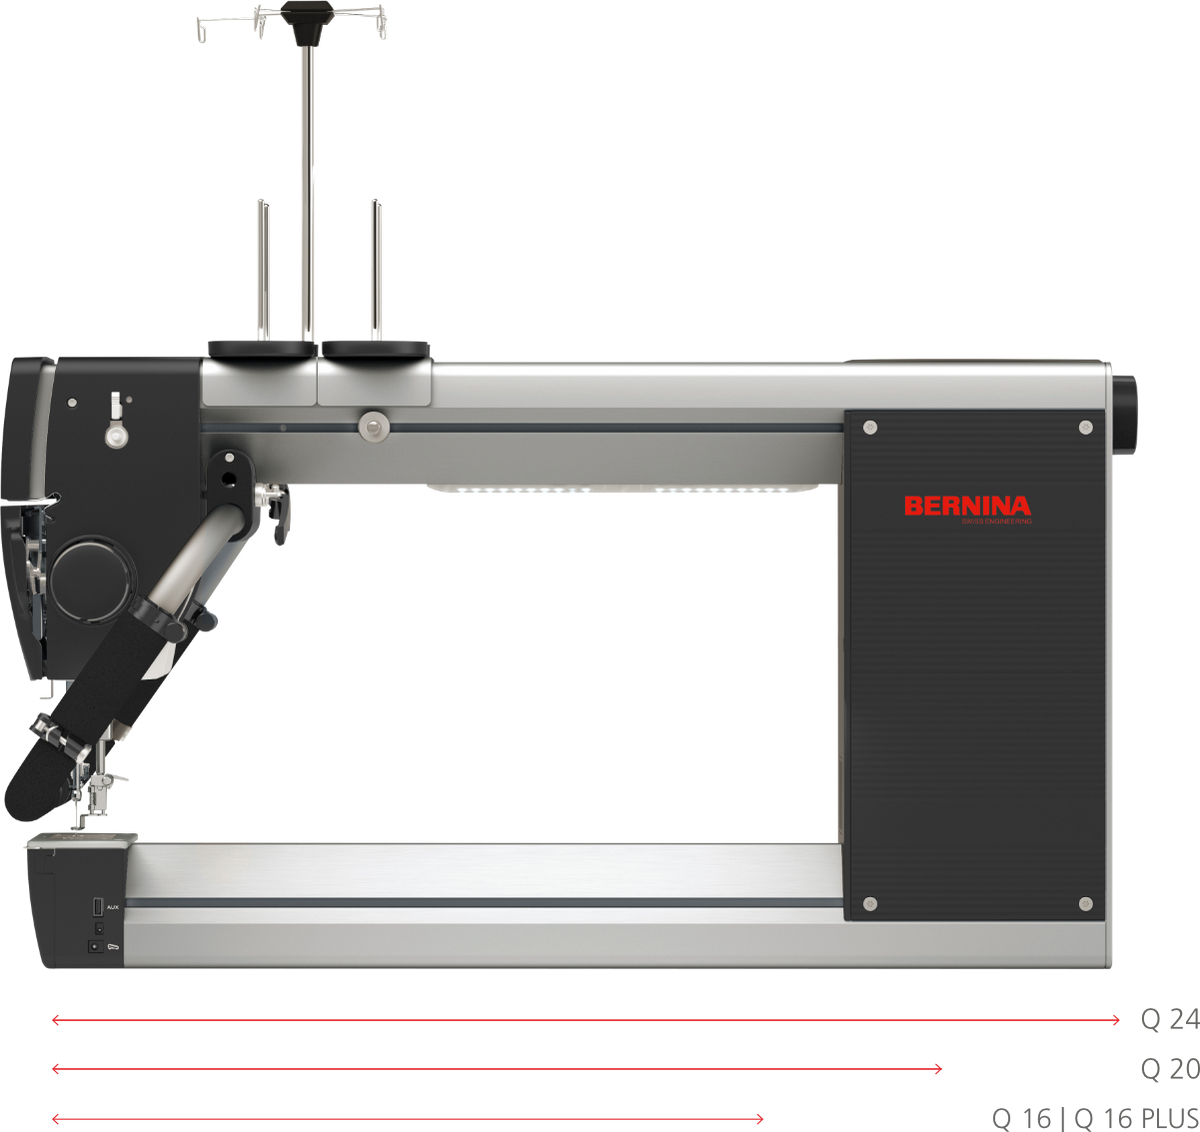 Bernina Q20 Longarm Quilting Machine with Studio Frame